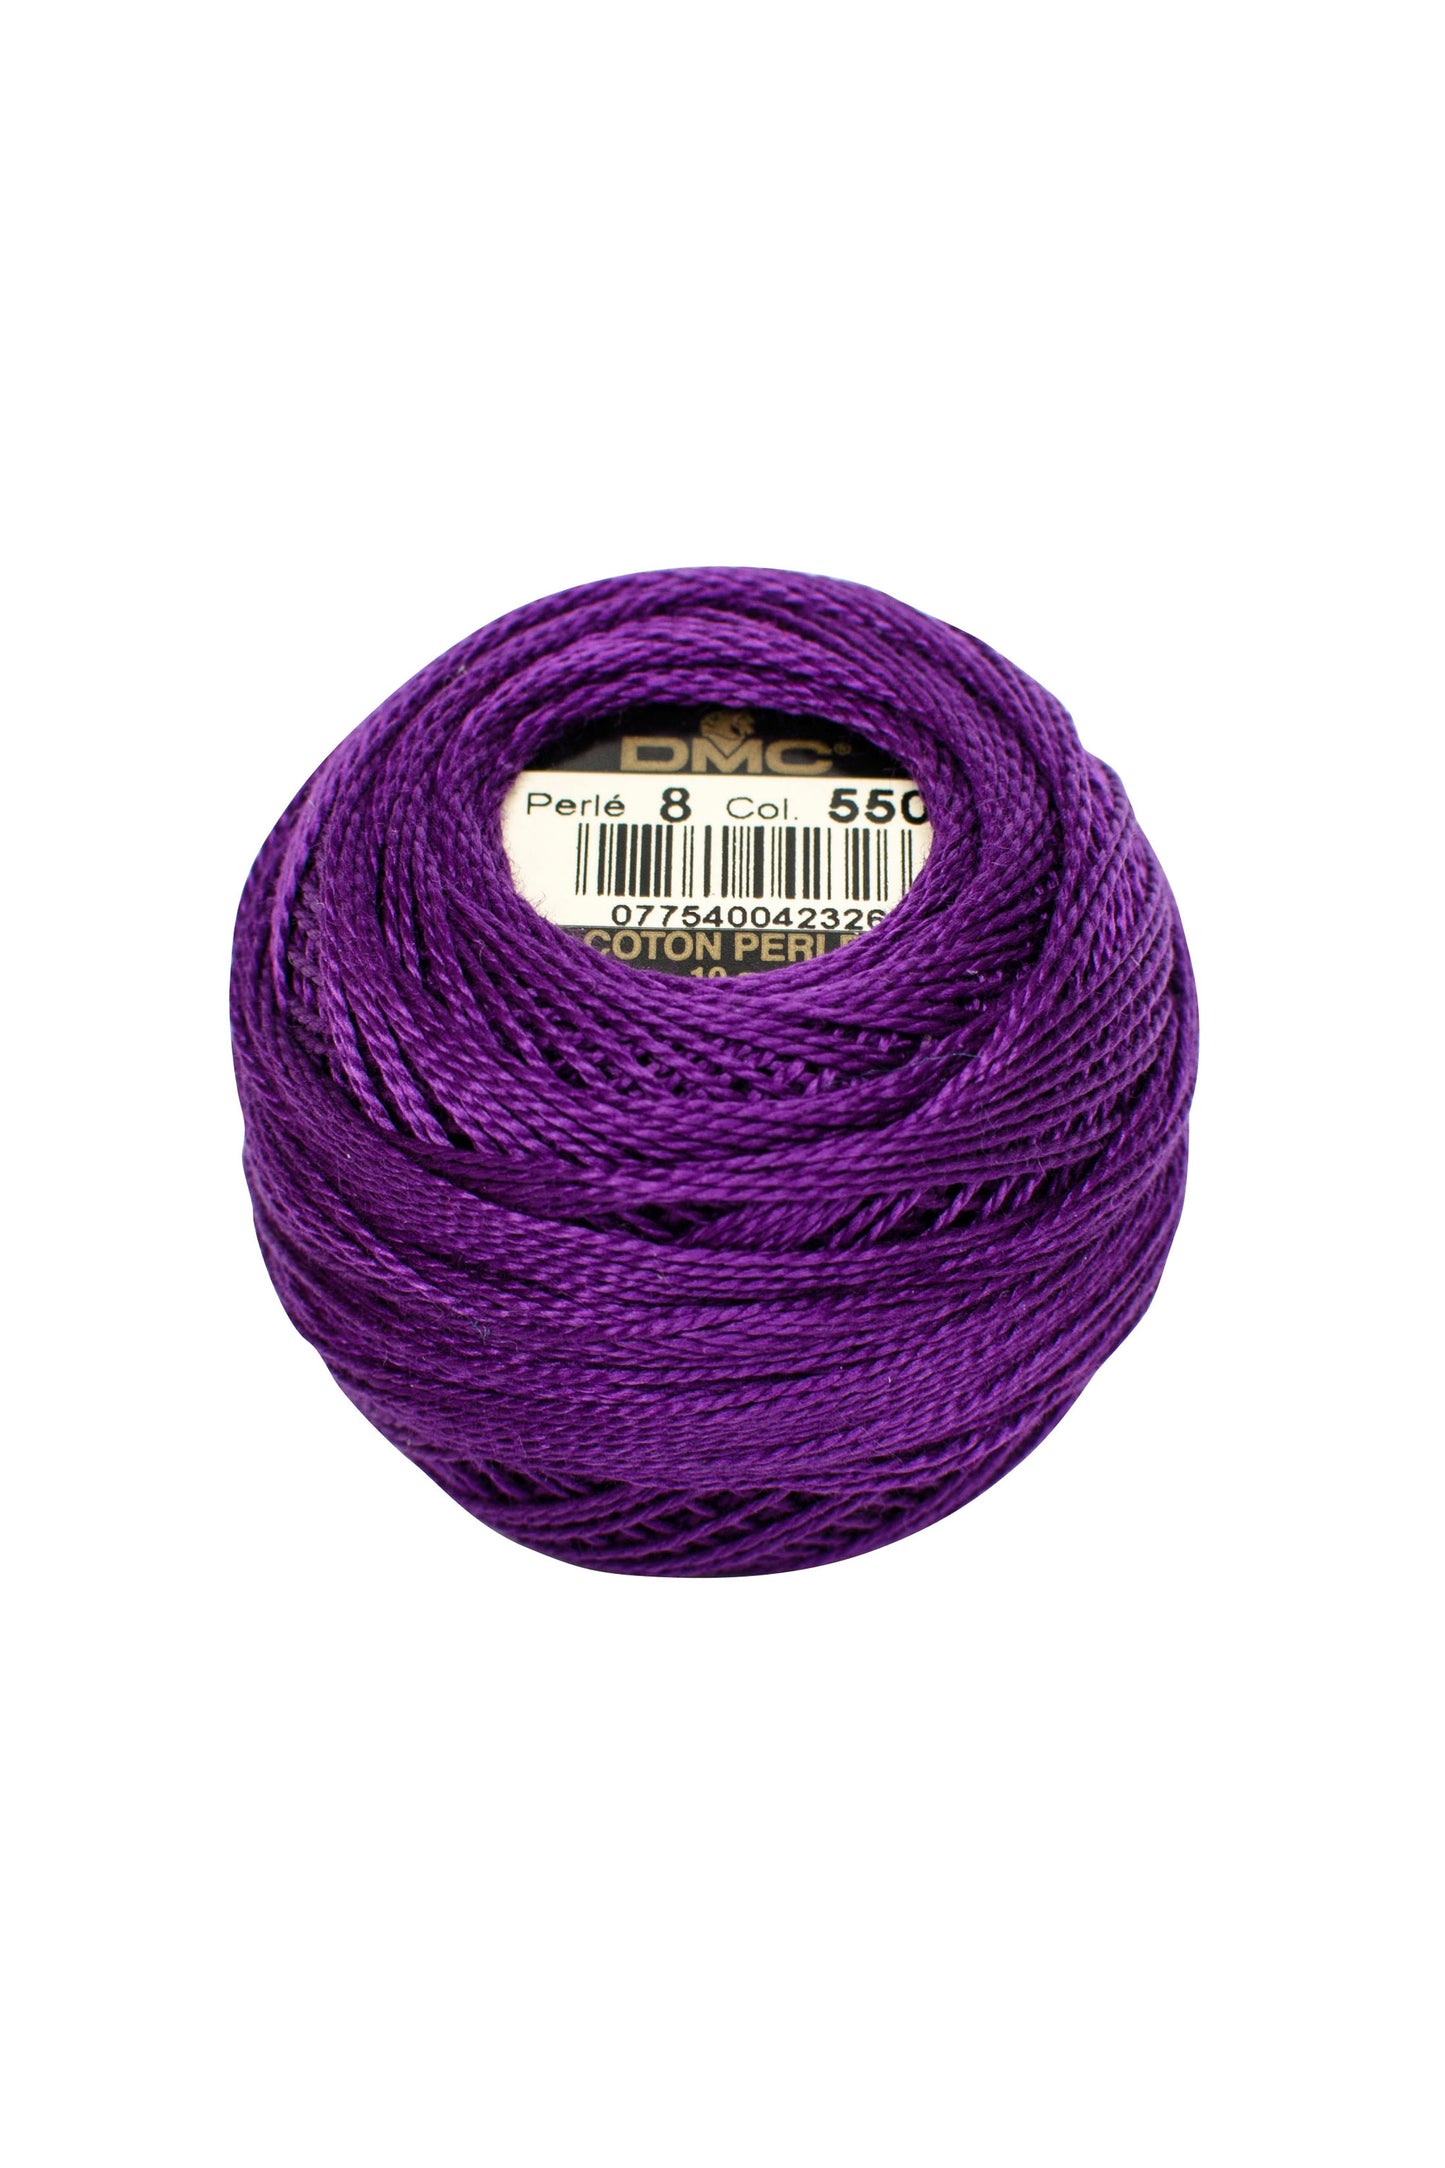 550 Very Dark Violet - DMC #8 Perle Cotton Ball